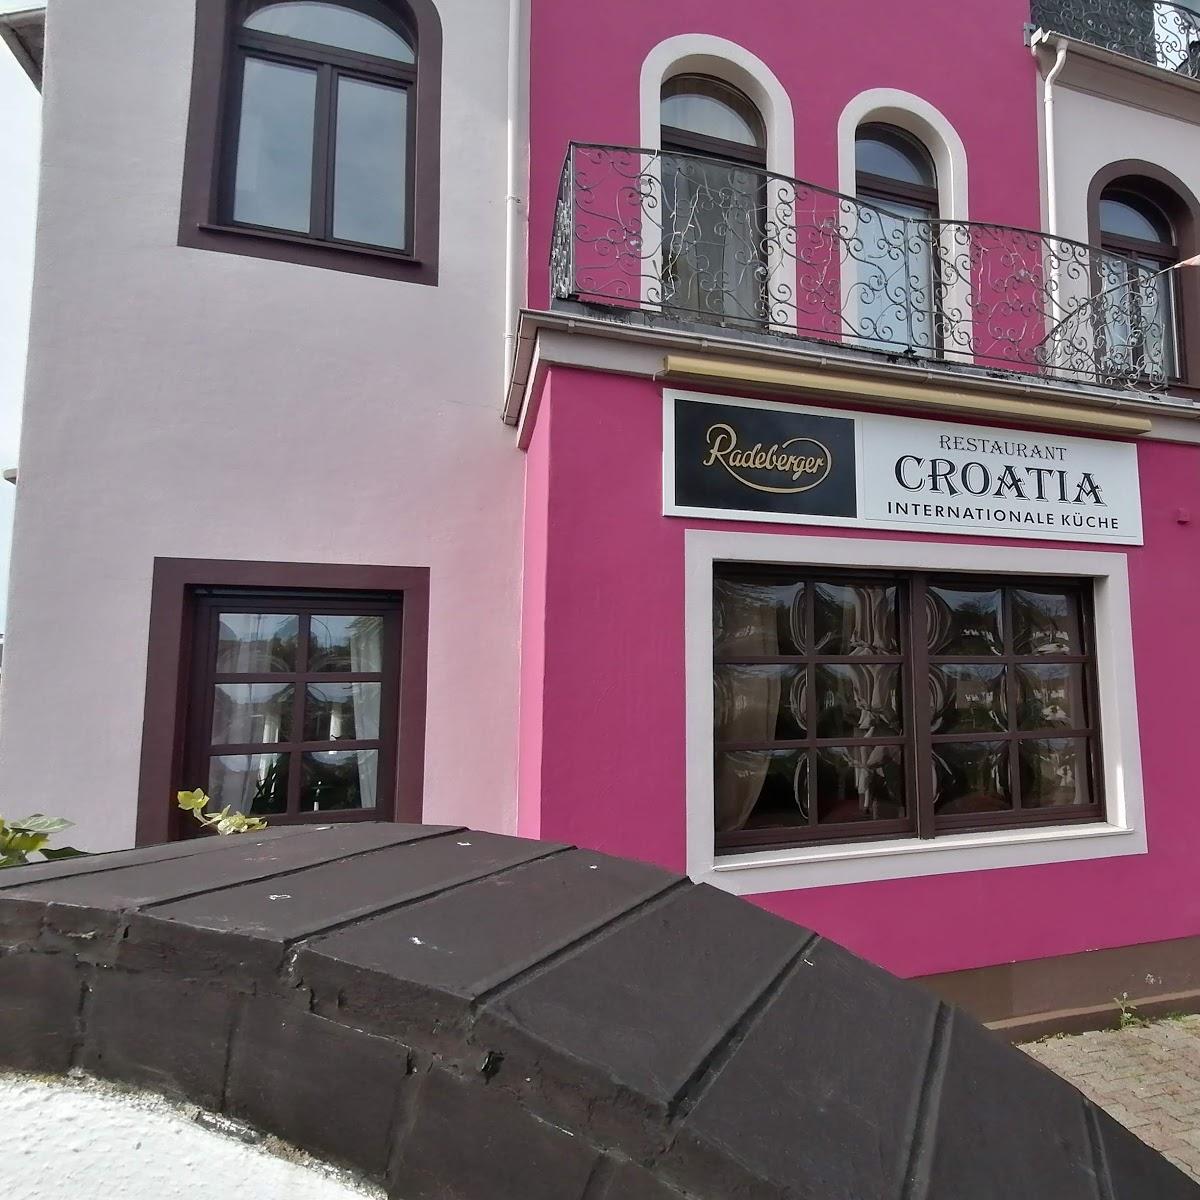 Restaurant "Hotel - Restaurant Croatia" in  Idstein